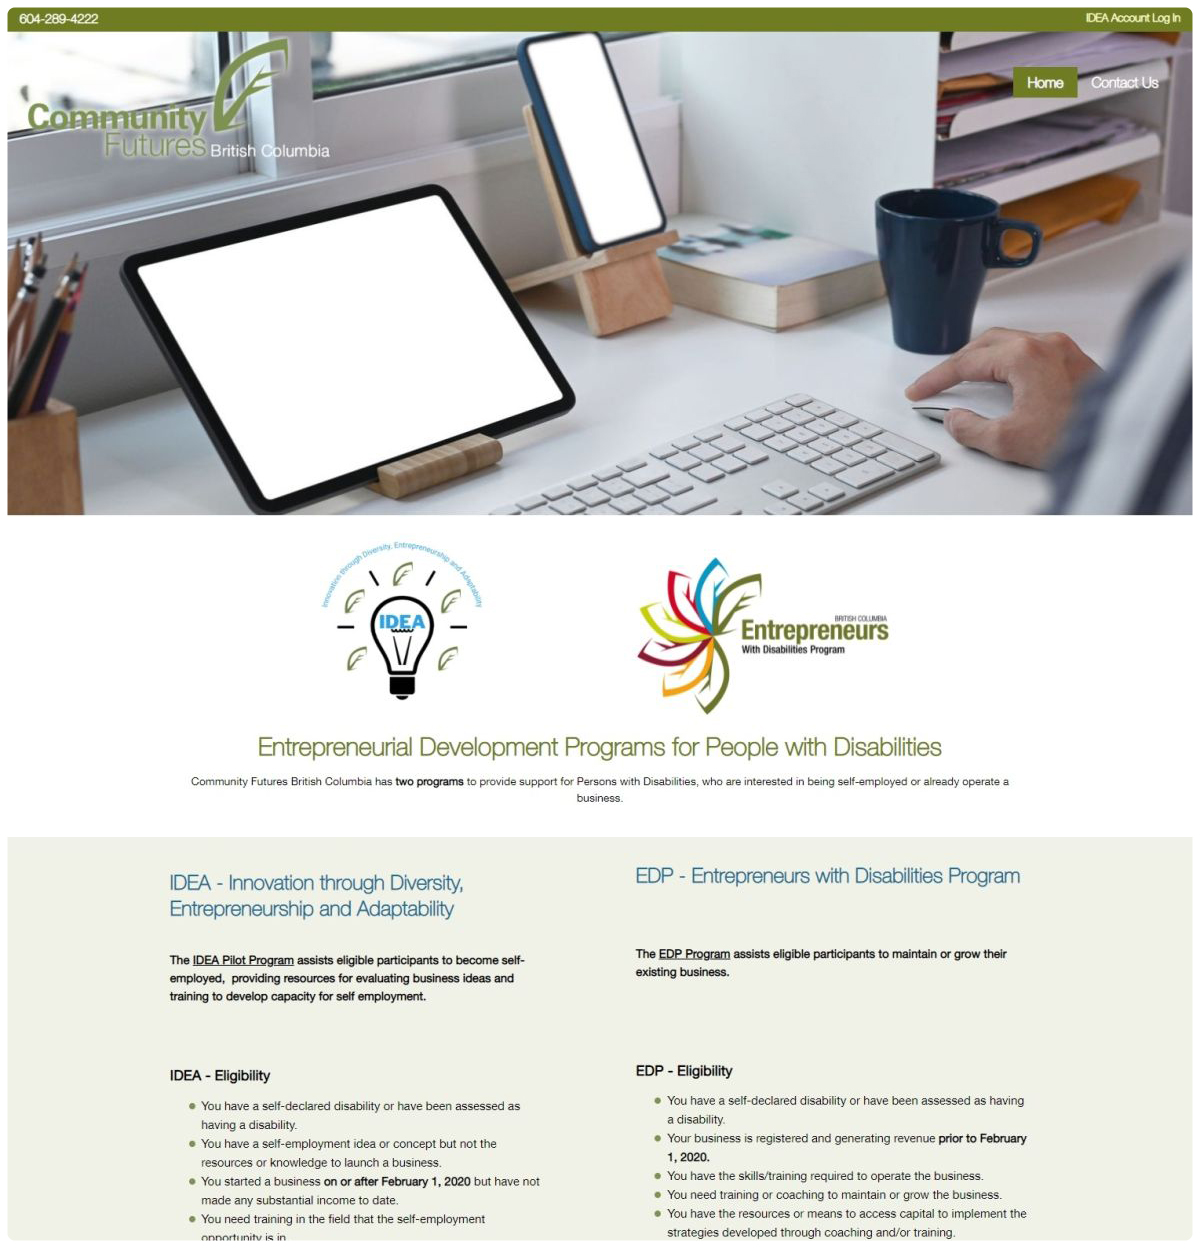  IDEA - Innovation through Diversity, Entrepreneurship and Adaptability